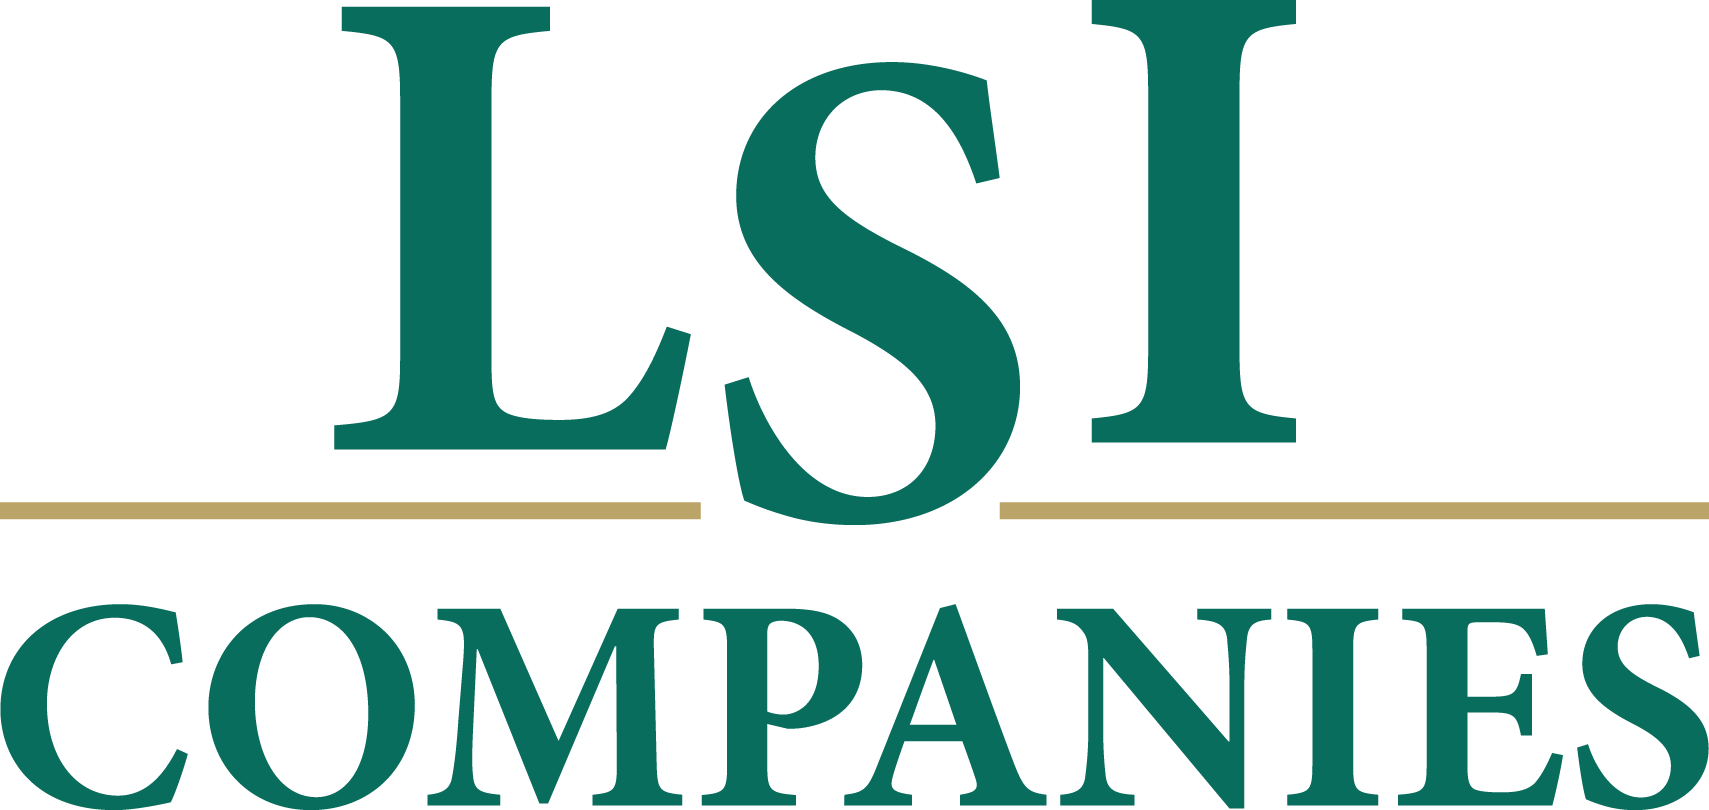 LSI Companies